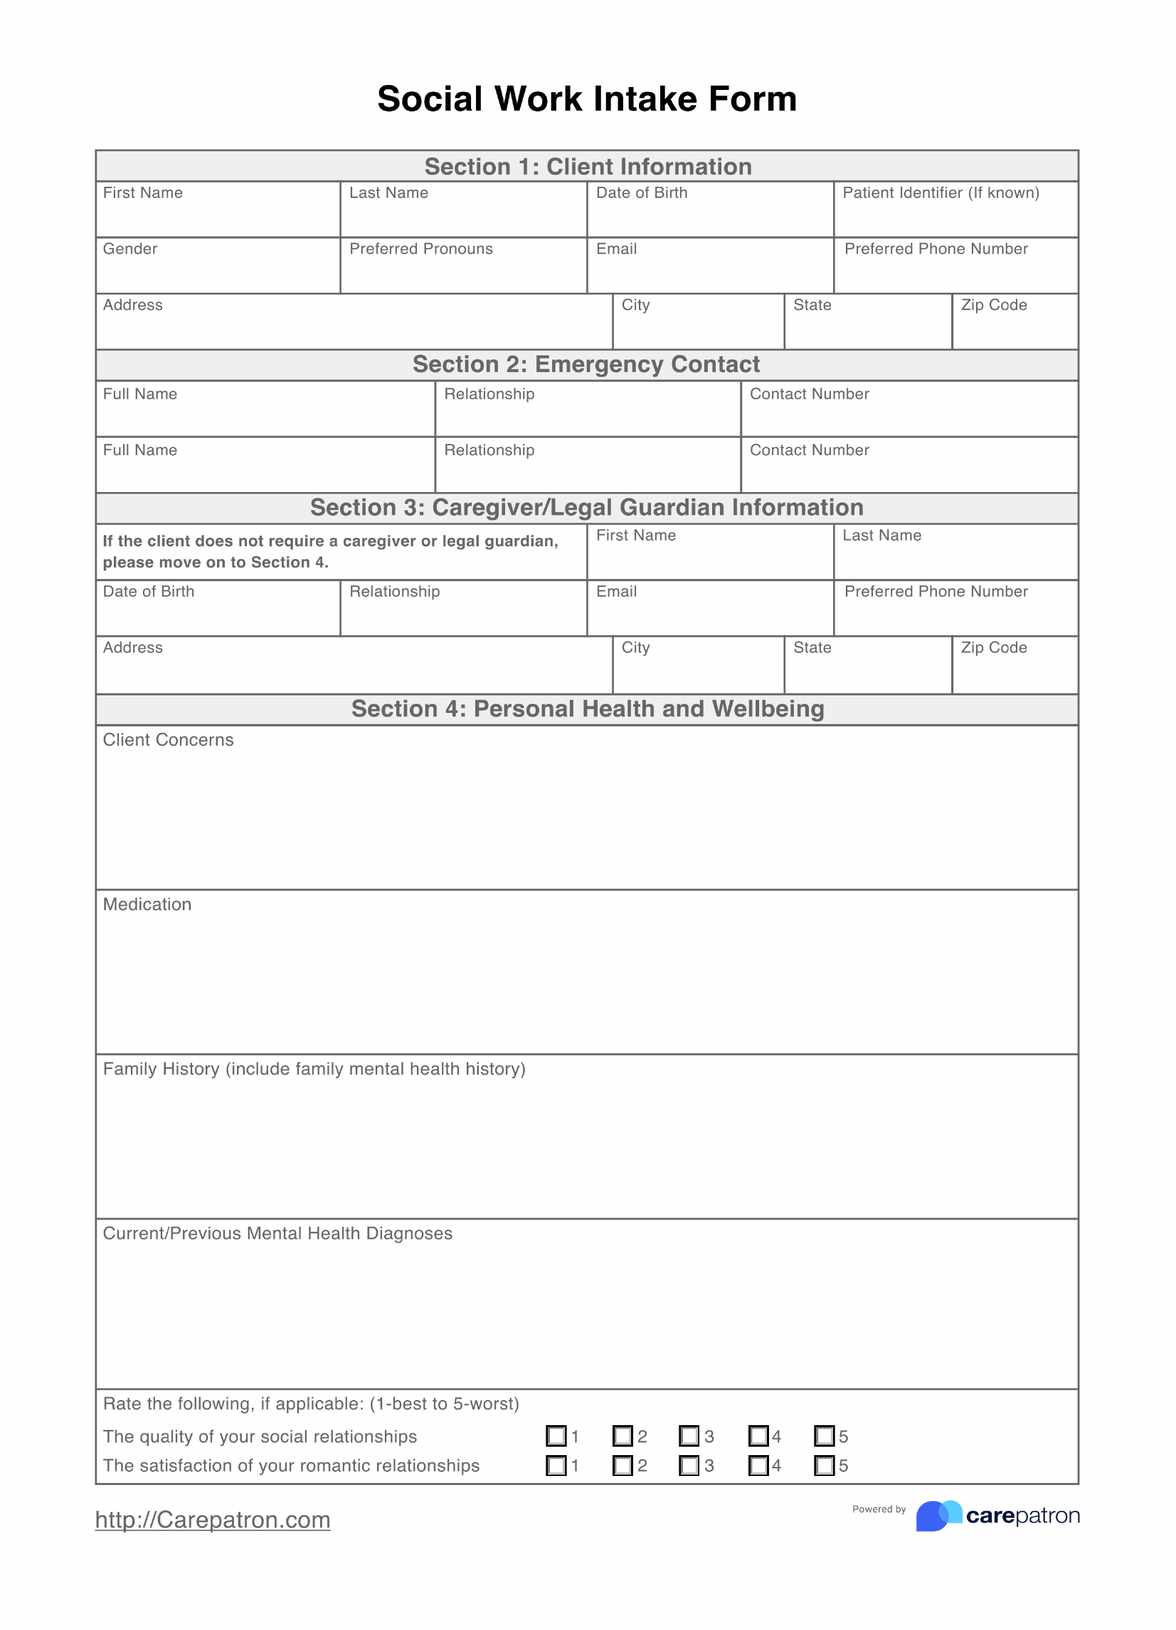 Social Work Intake Form PDF Example